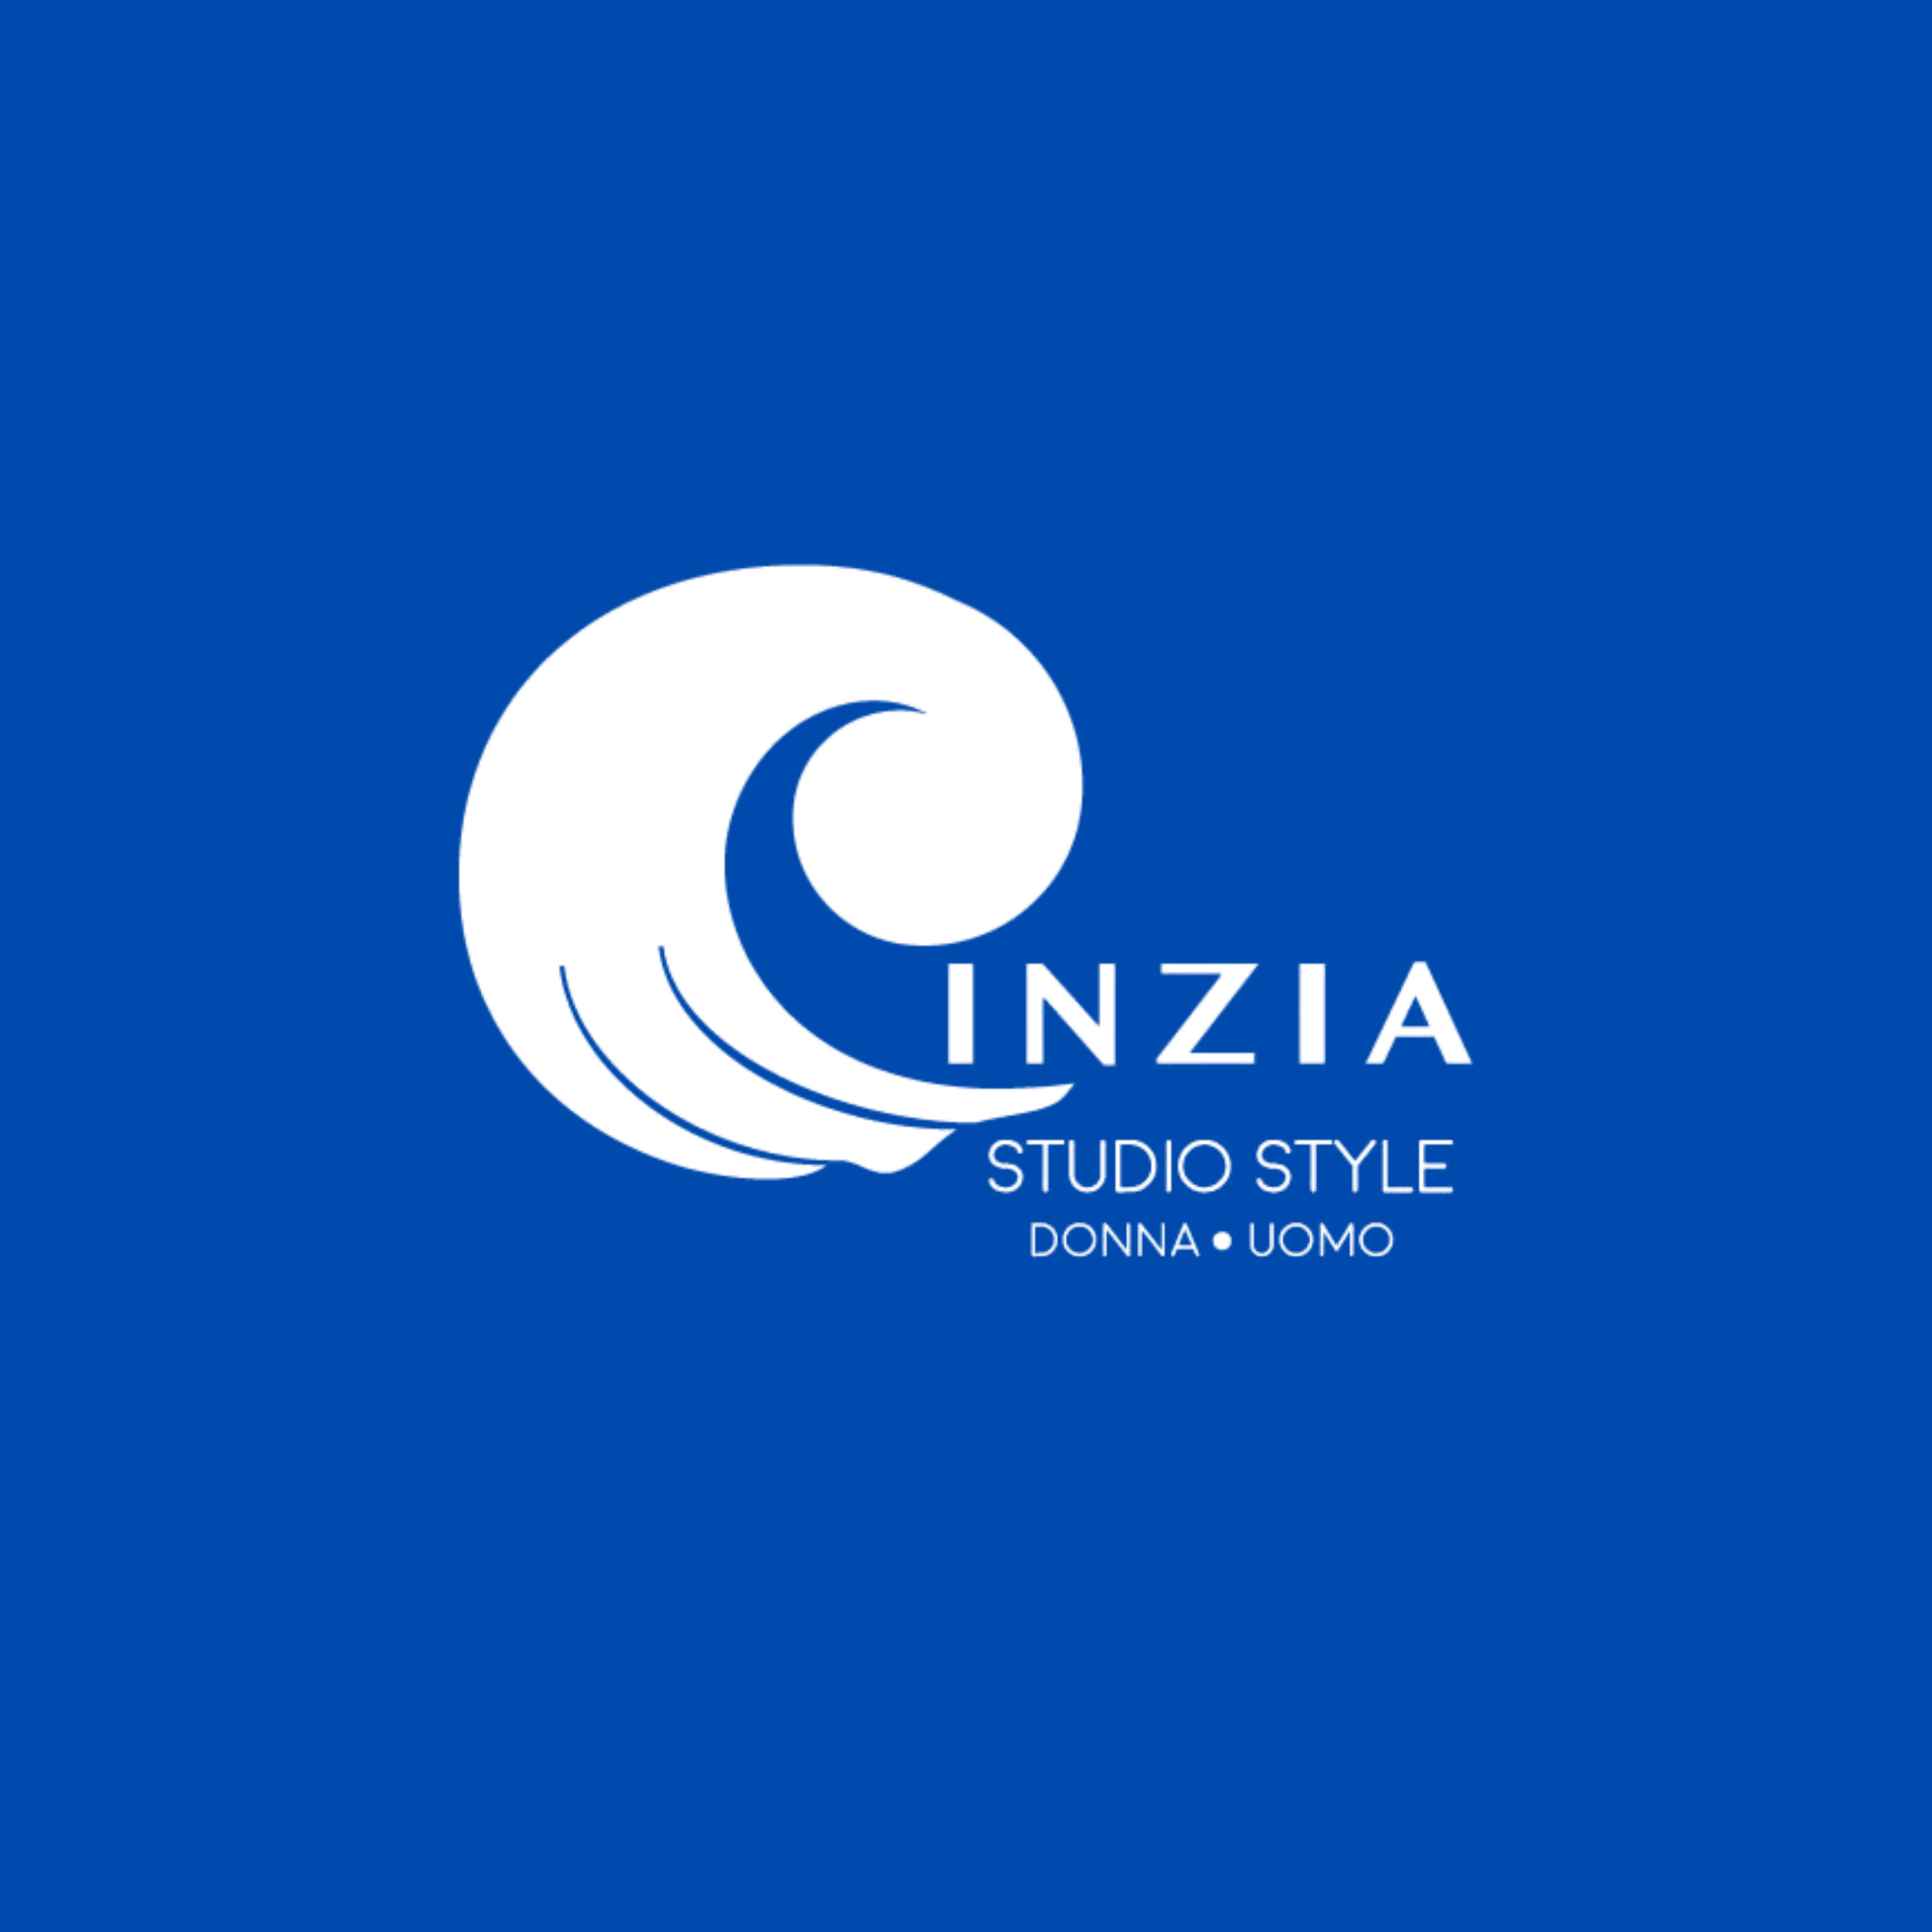 CINZIA_STUDIO_STYLE